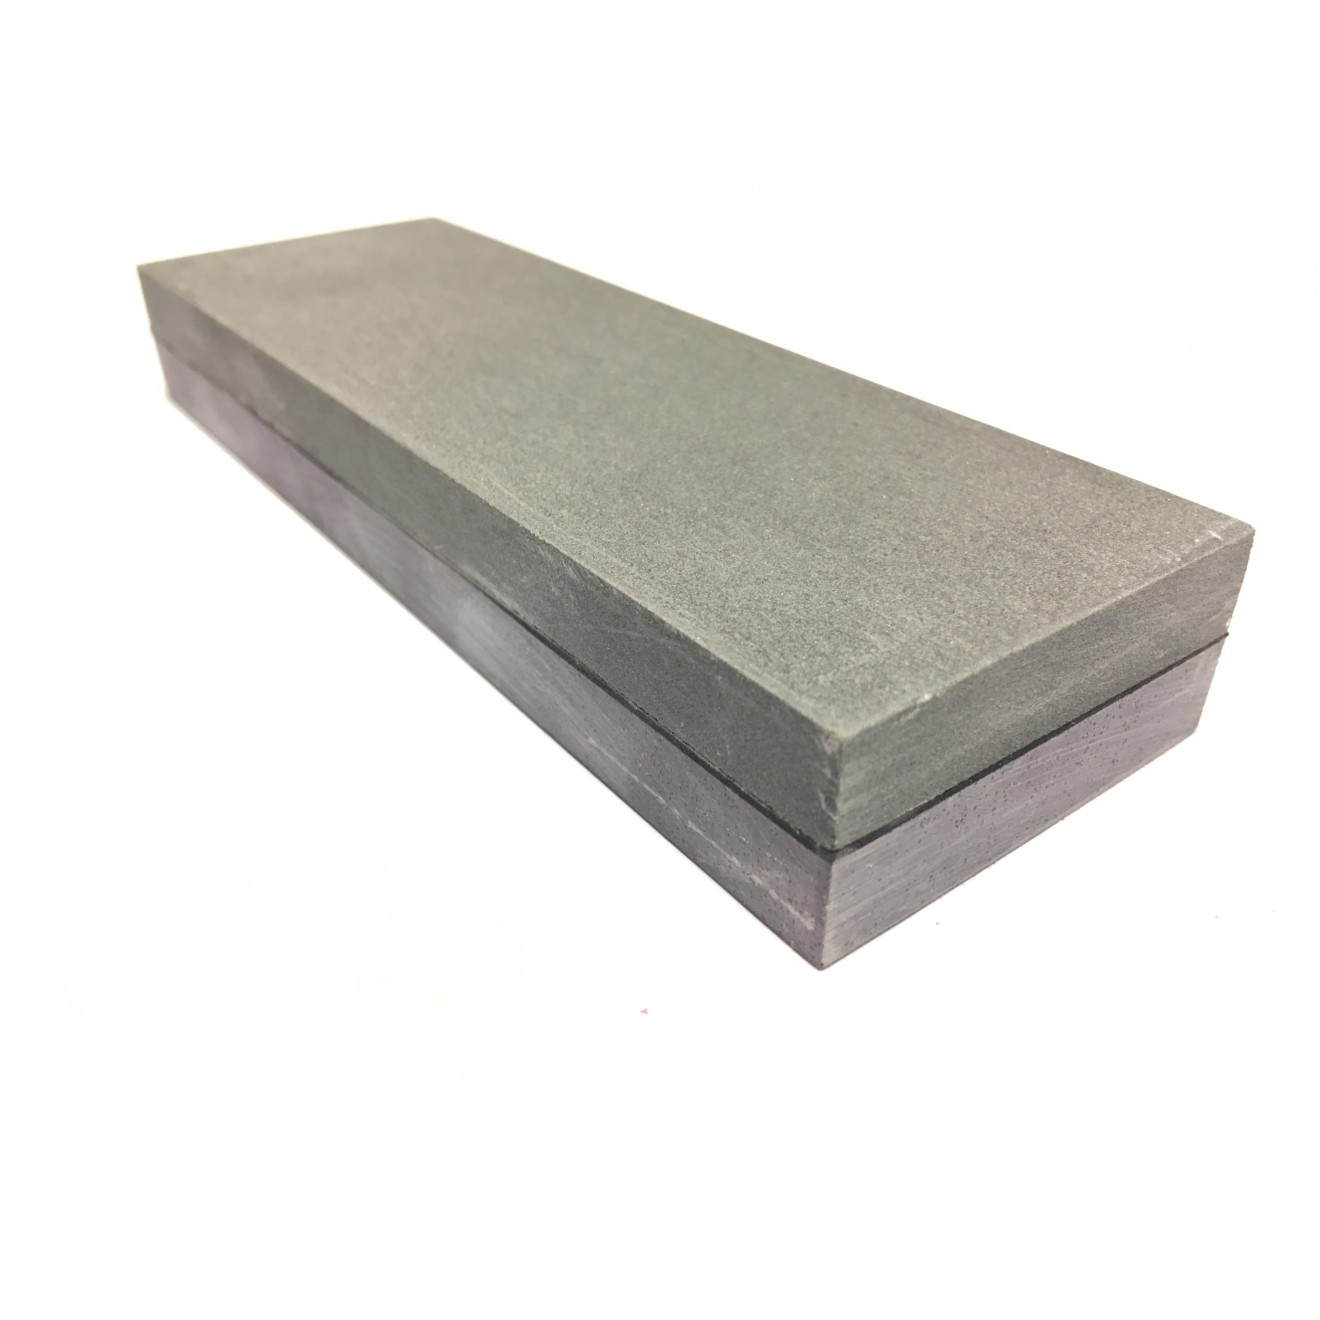 Whetston CotPyr 5.90x1.96 inch natural combination stone